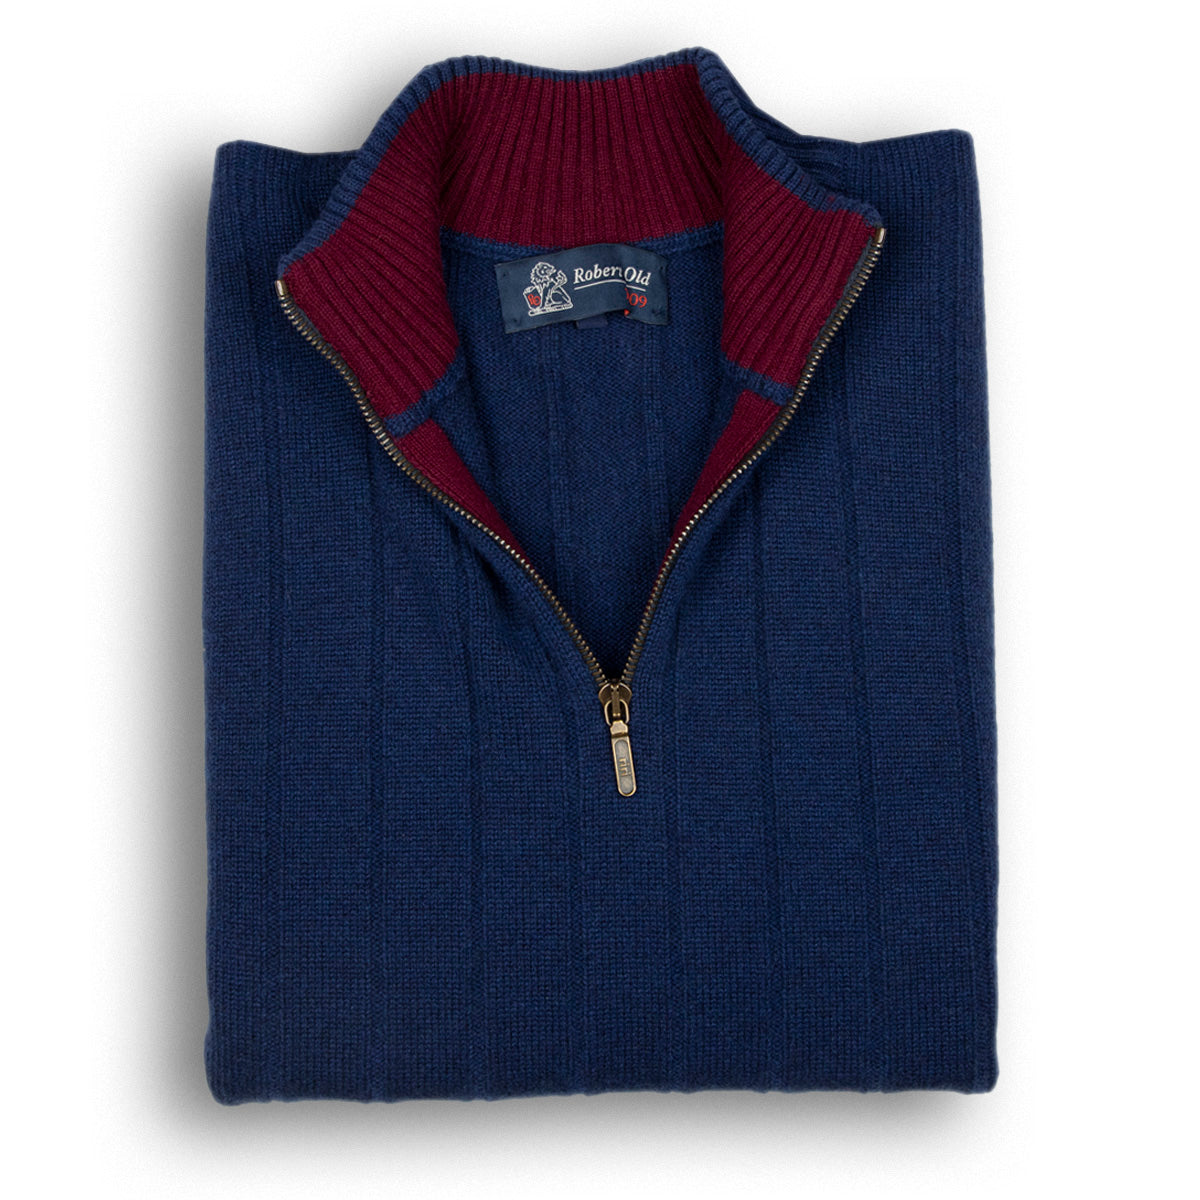 The Wellington Cashmere Ribbed Zip Neck Sweater - Inchiostro / Pompeii  Robert Old Inchiostro - Pompeii UK 38" 